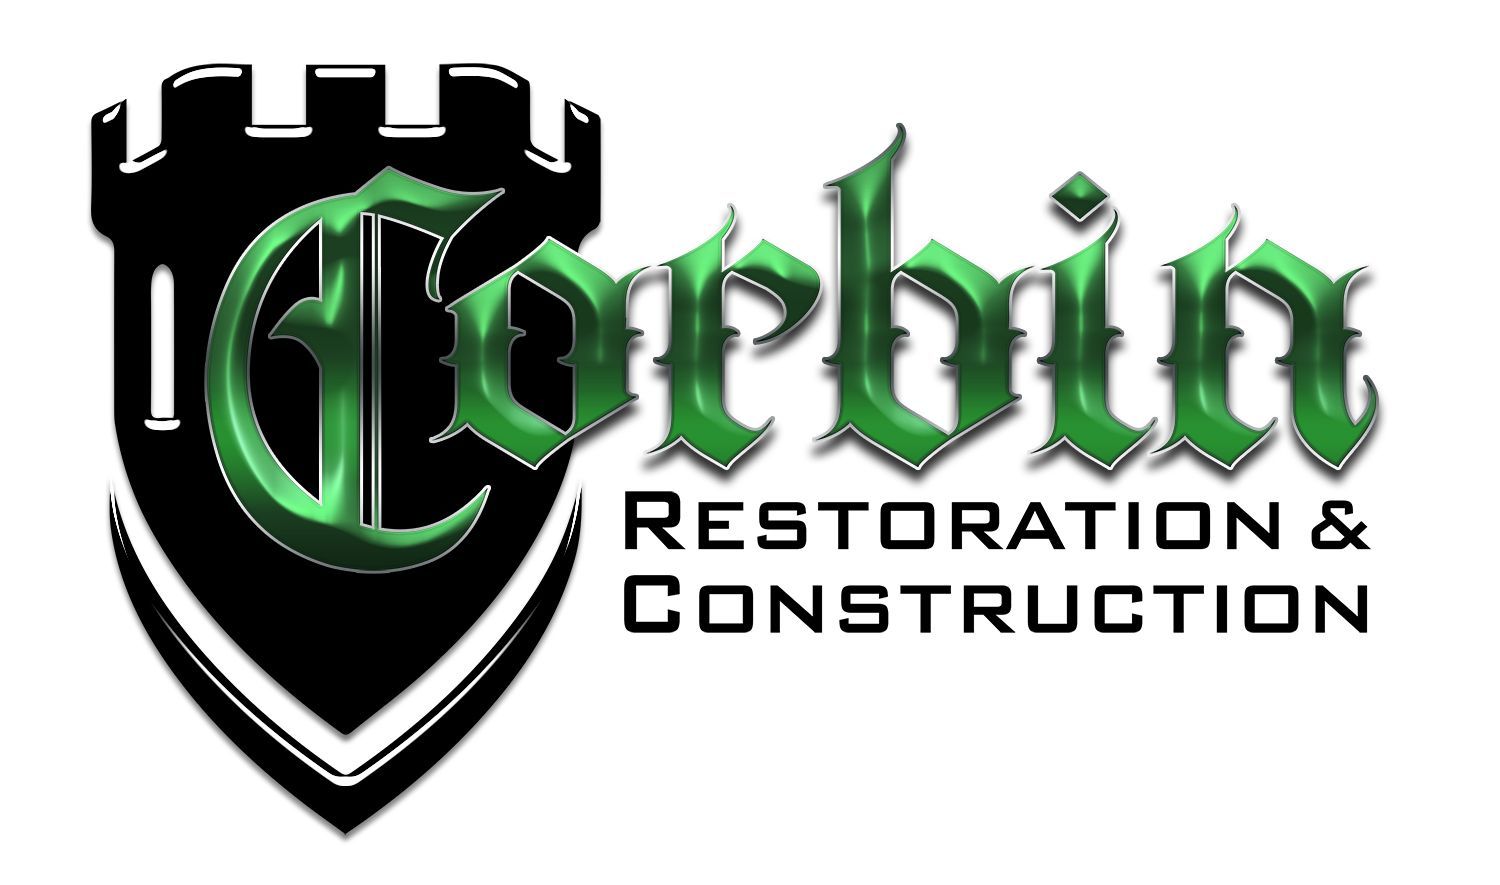 Corbin Restoration Construction Logo With White Background - Minneapolis, MN - Corbin Restoration an